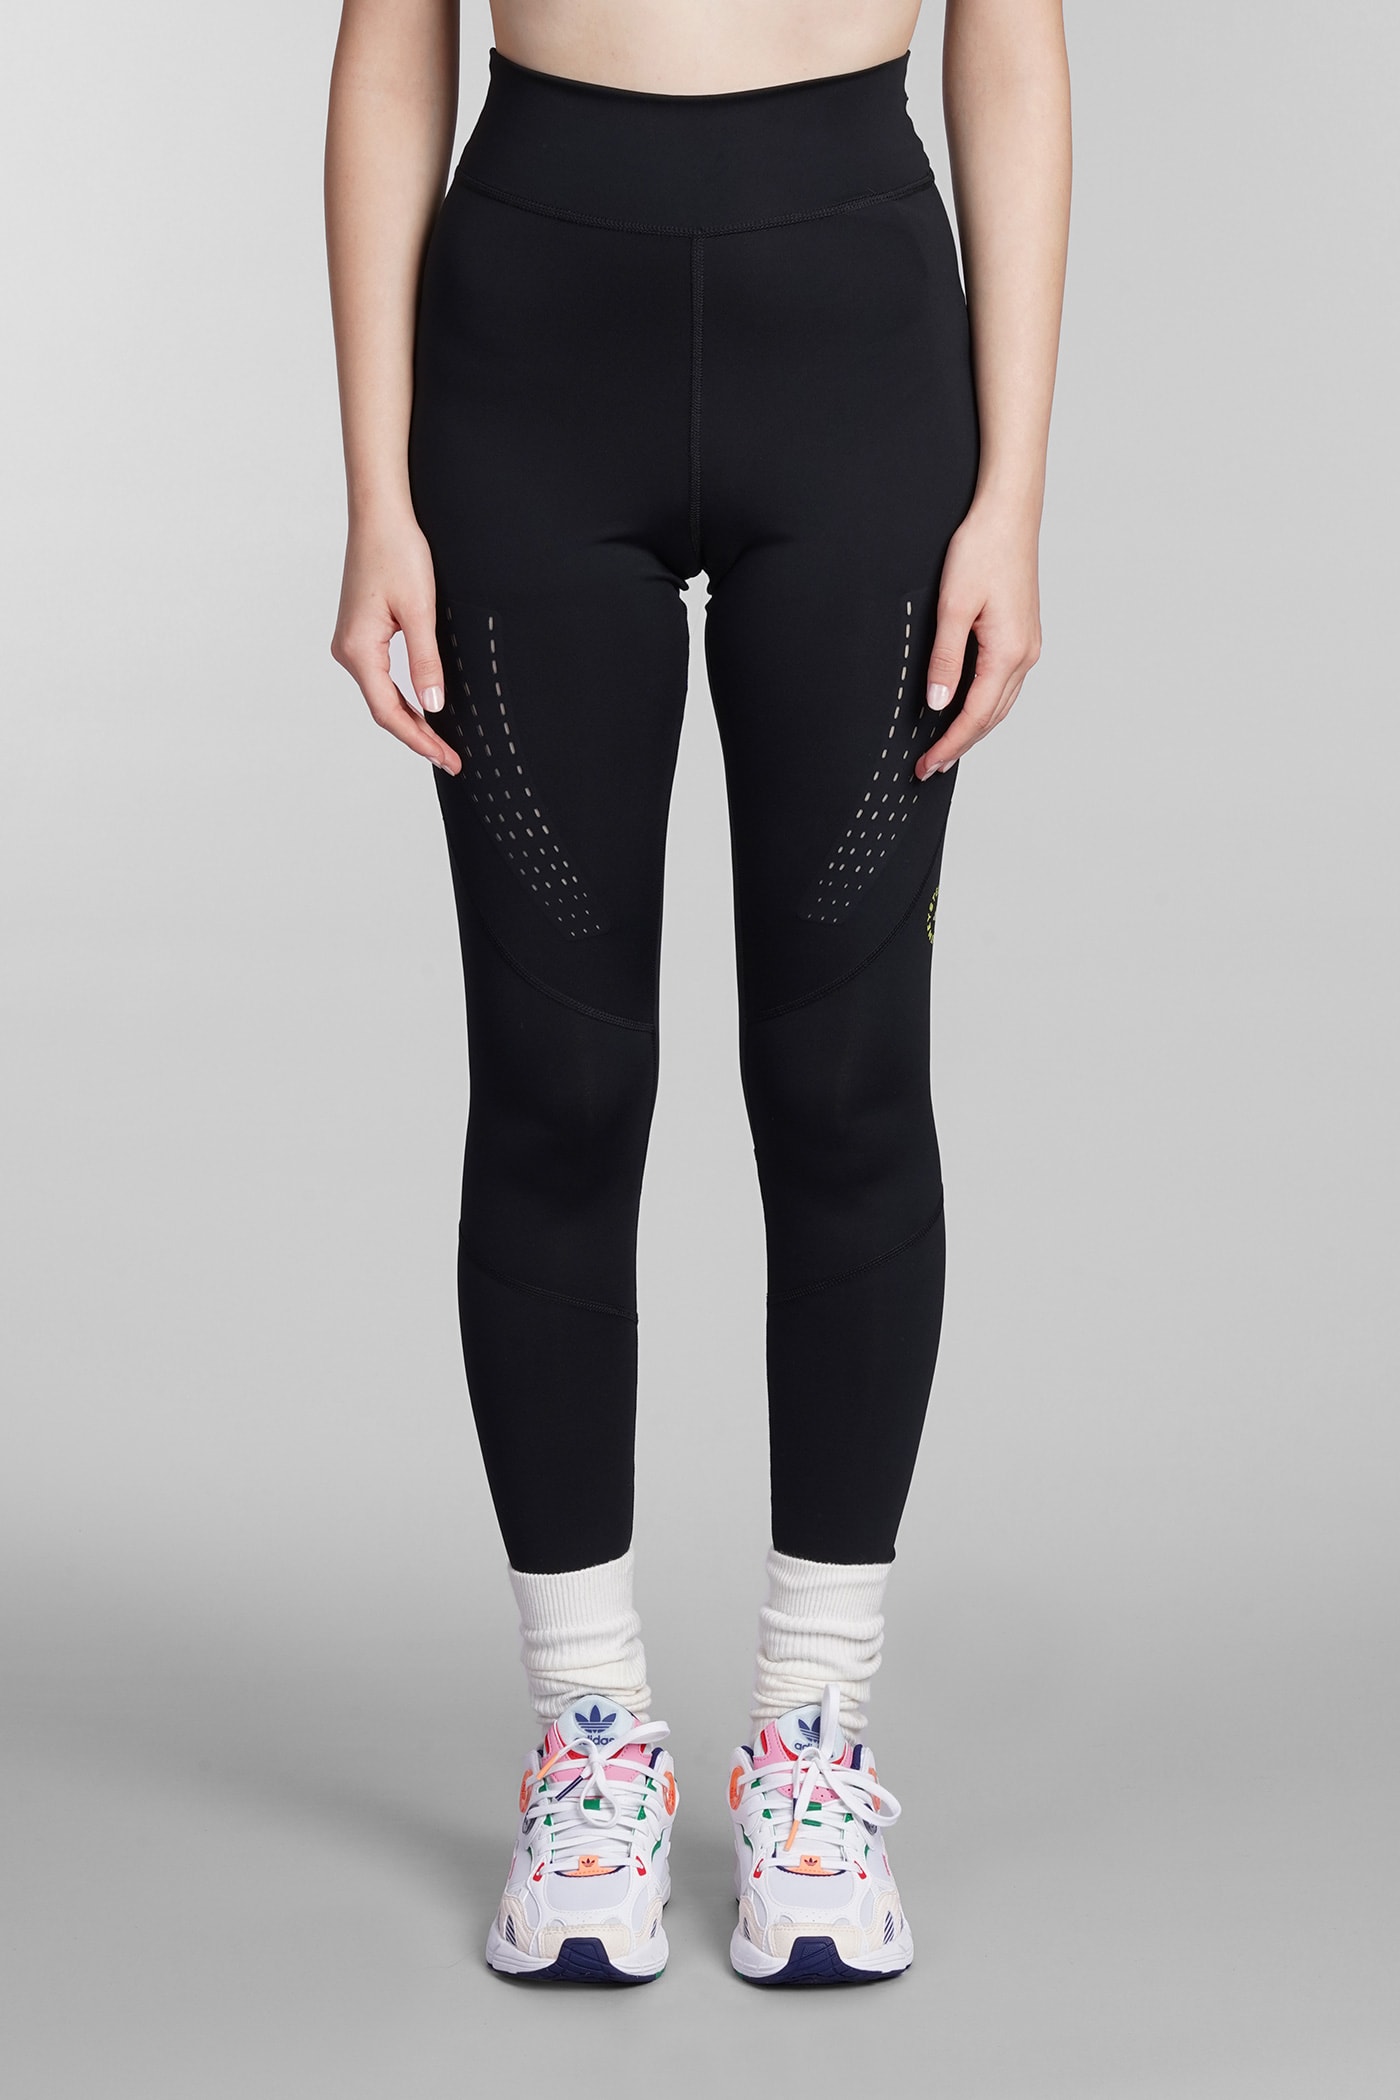 Adidas by Stella McCartney Leggins In Black Synthetic Fibers